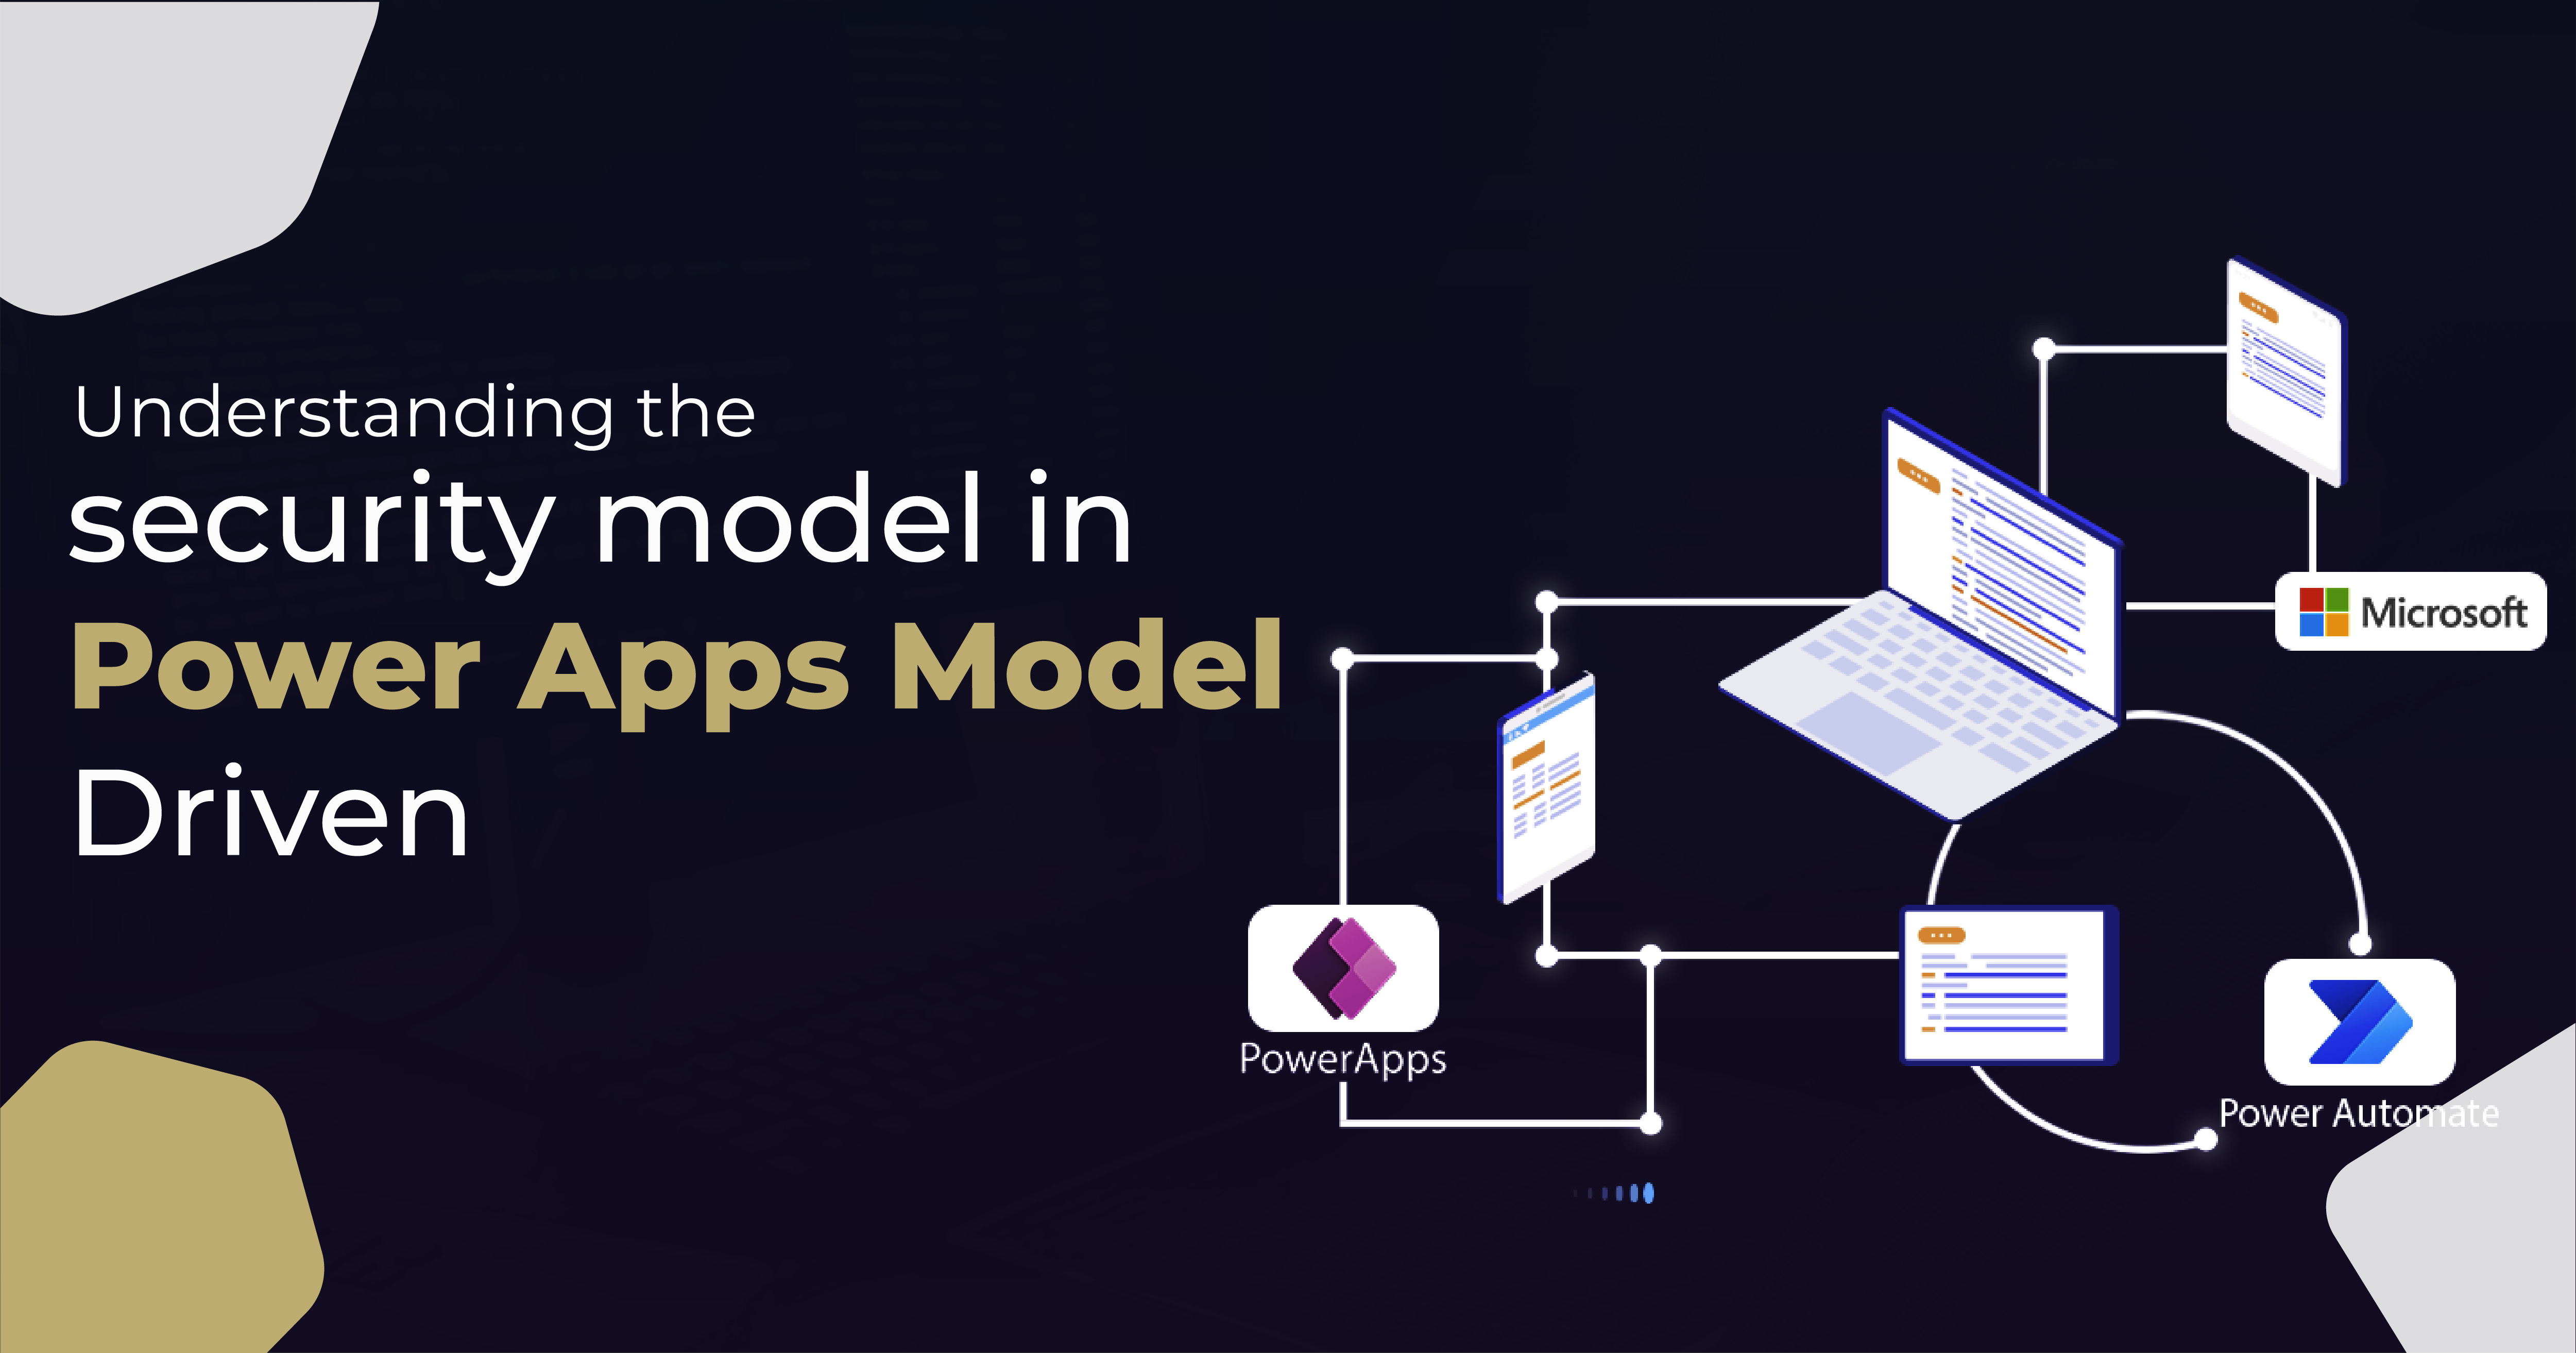 Power apps model